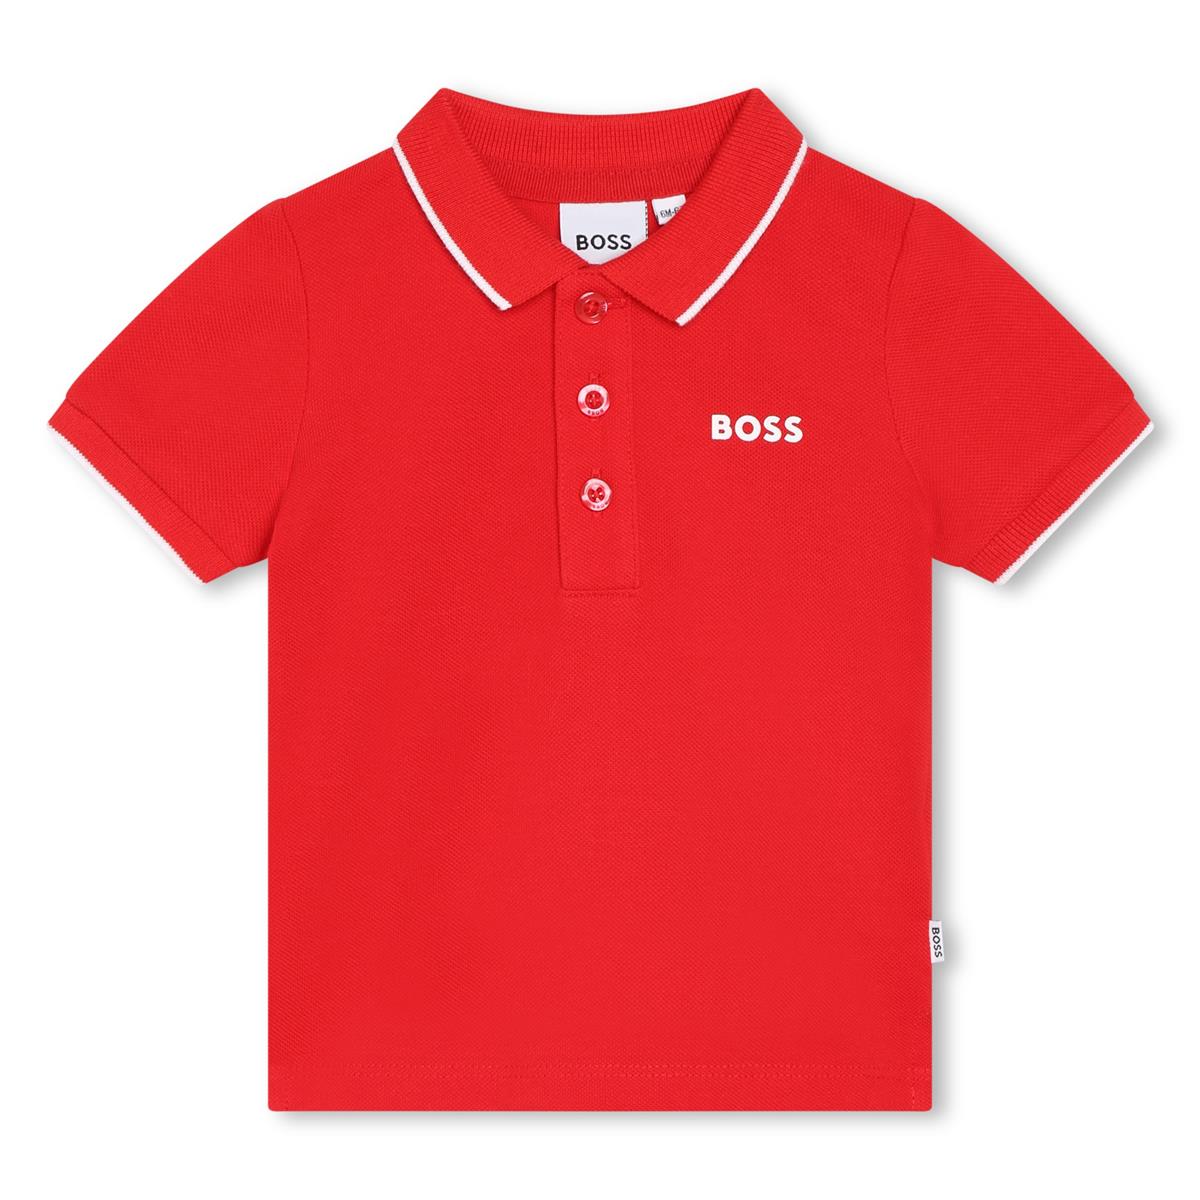 Baby Boys Red Polo Shirt